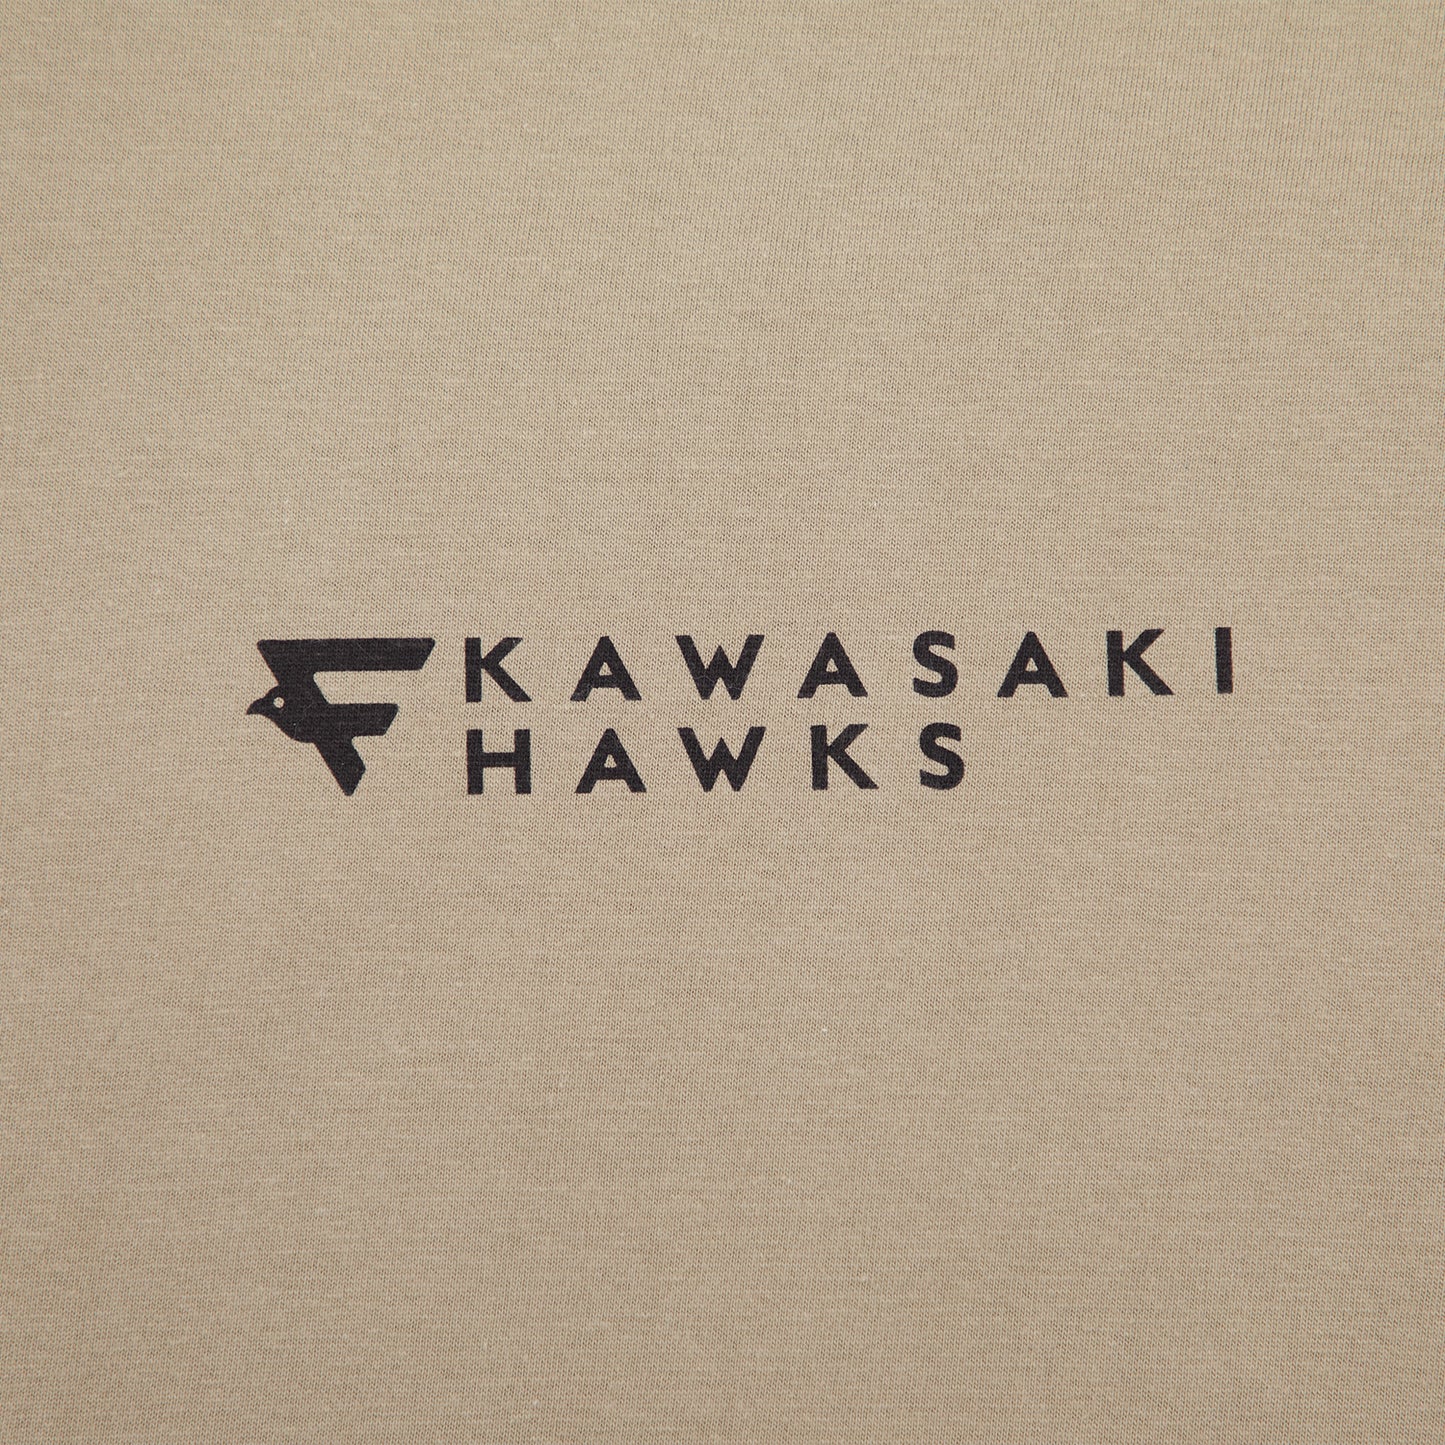 KAWASAKI HAWKS LOGO T-shirt KHAKI